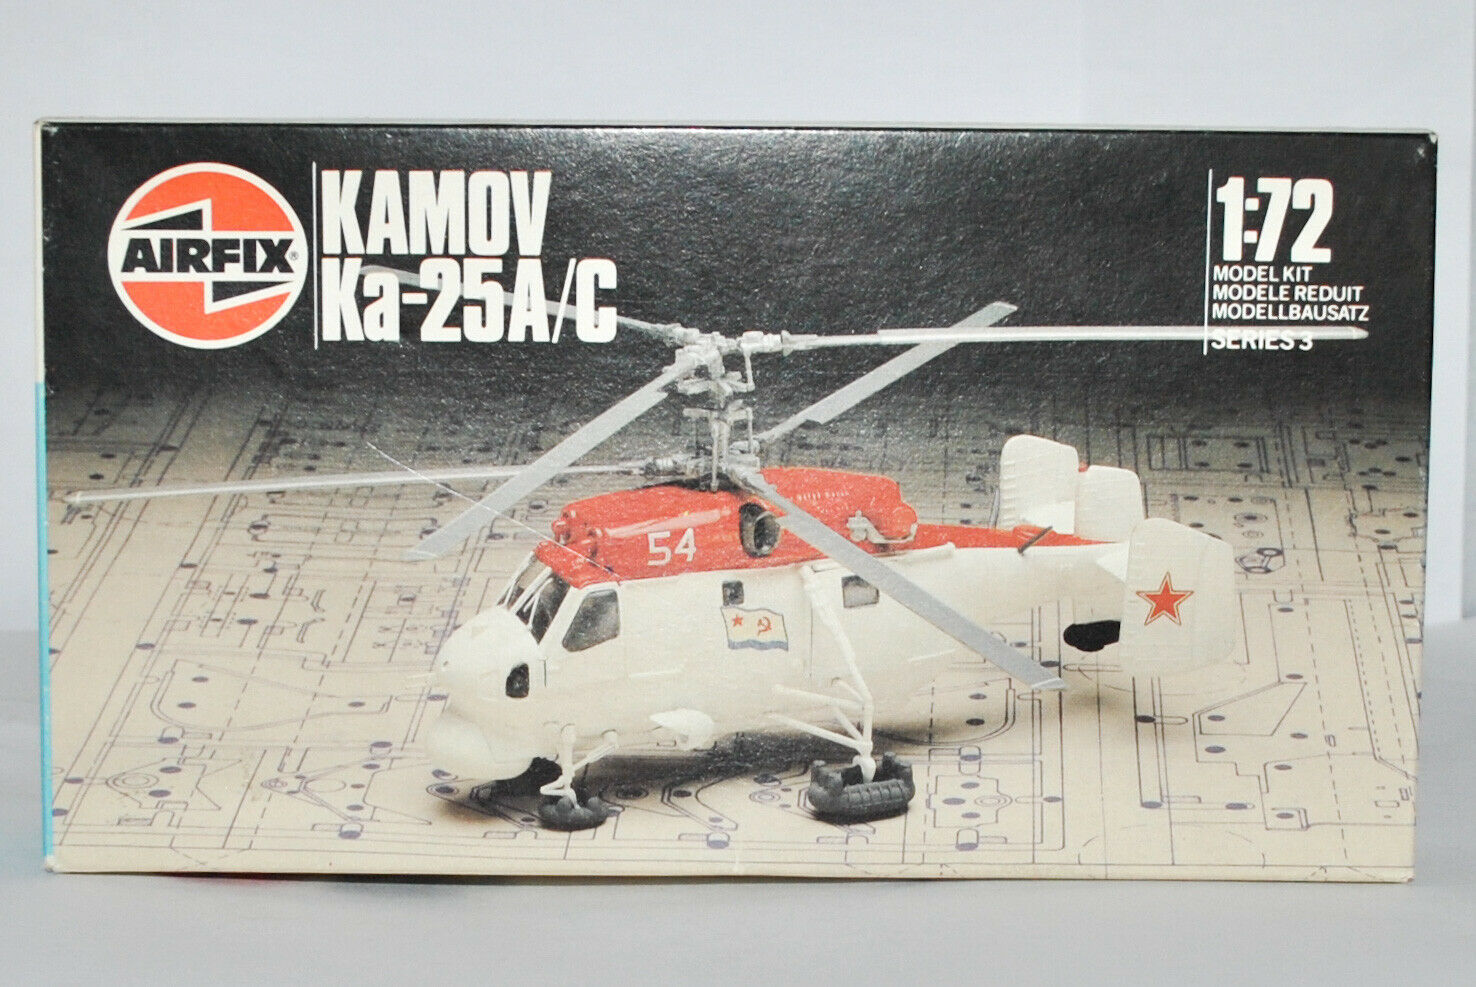 Kamov Ka-25A/C